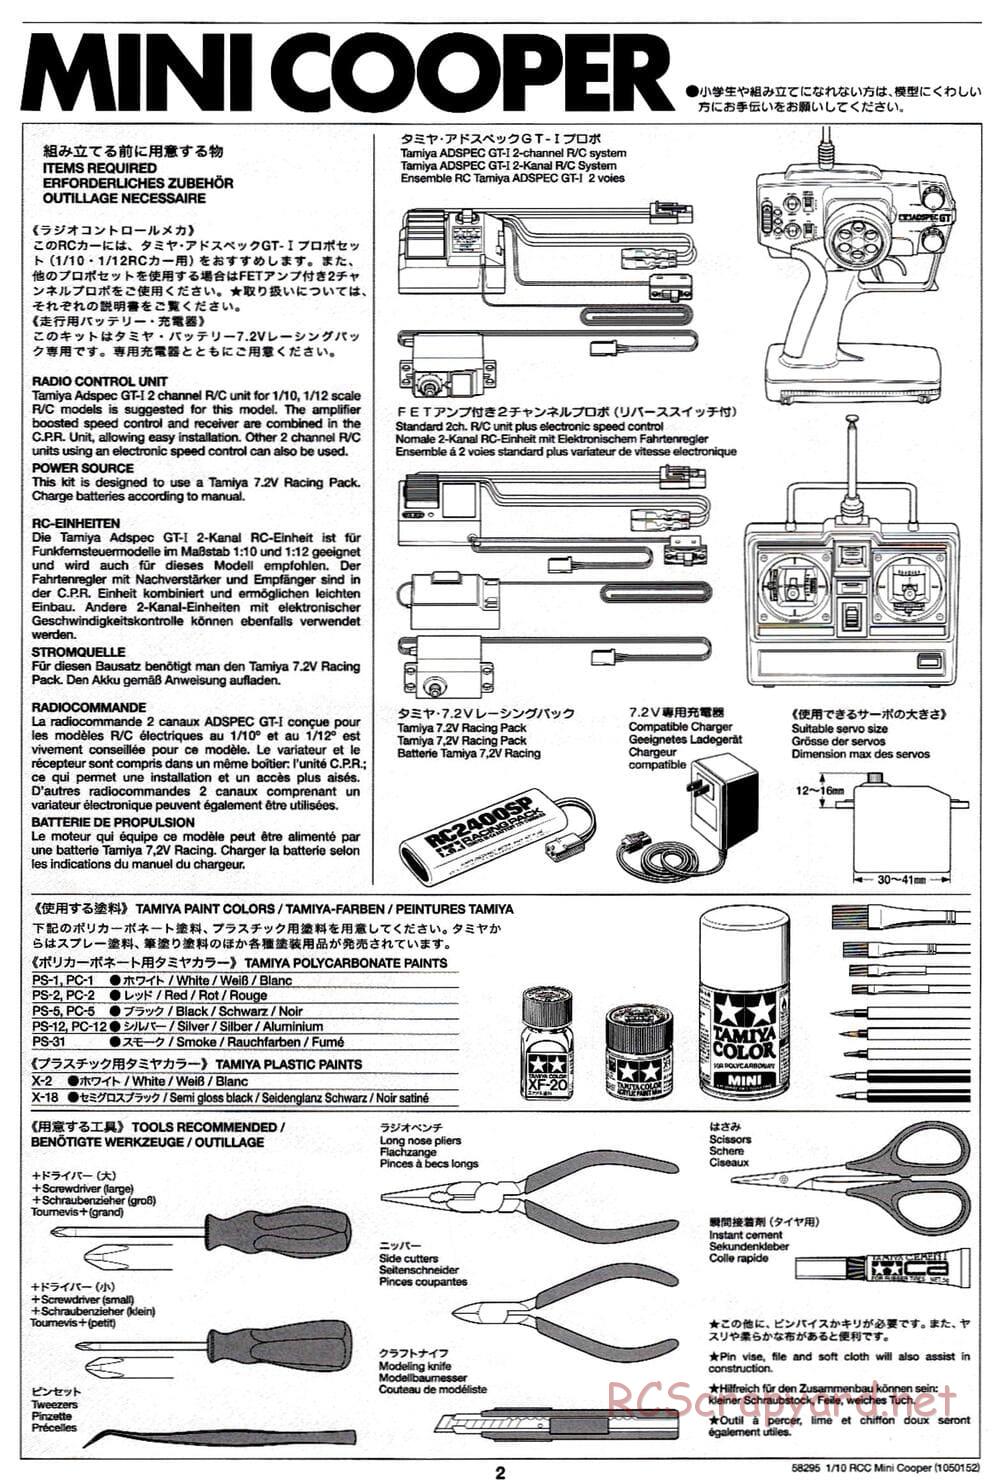 Tamiya - Mini Cooper - M03L Chassis - Manual - Page 19